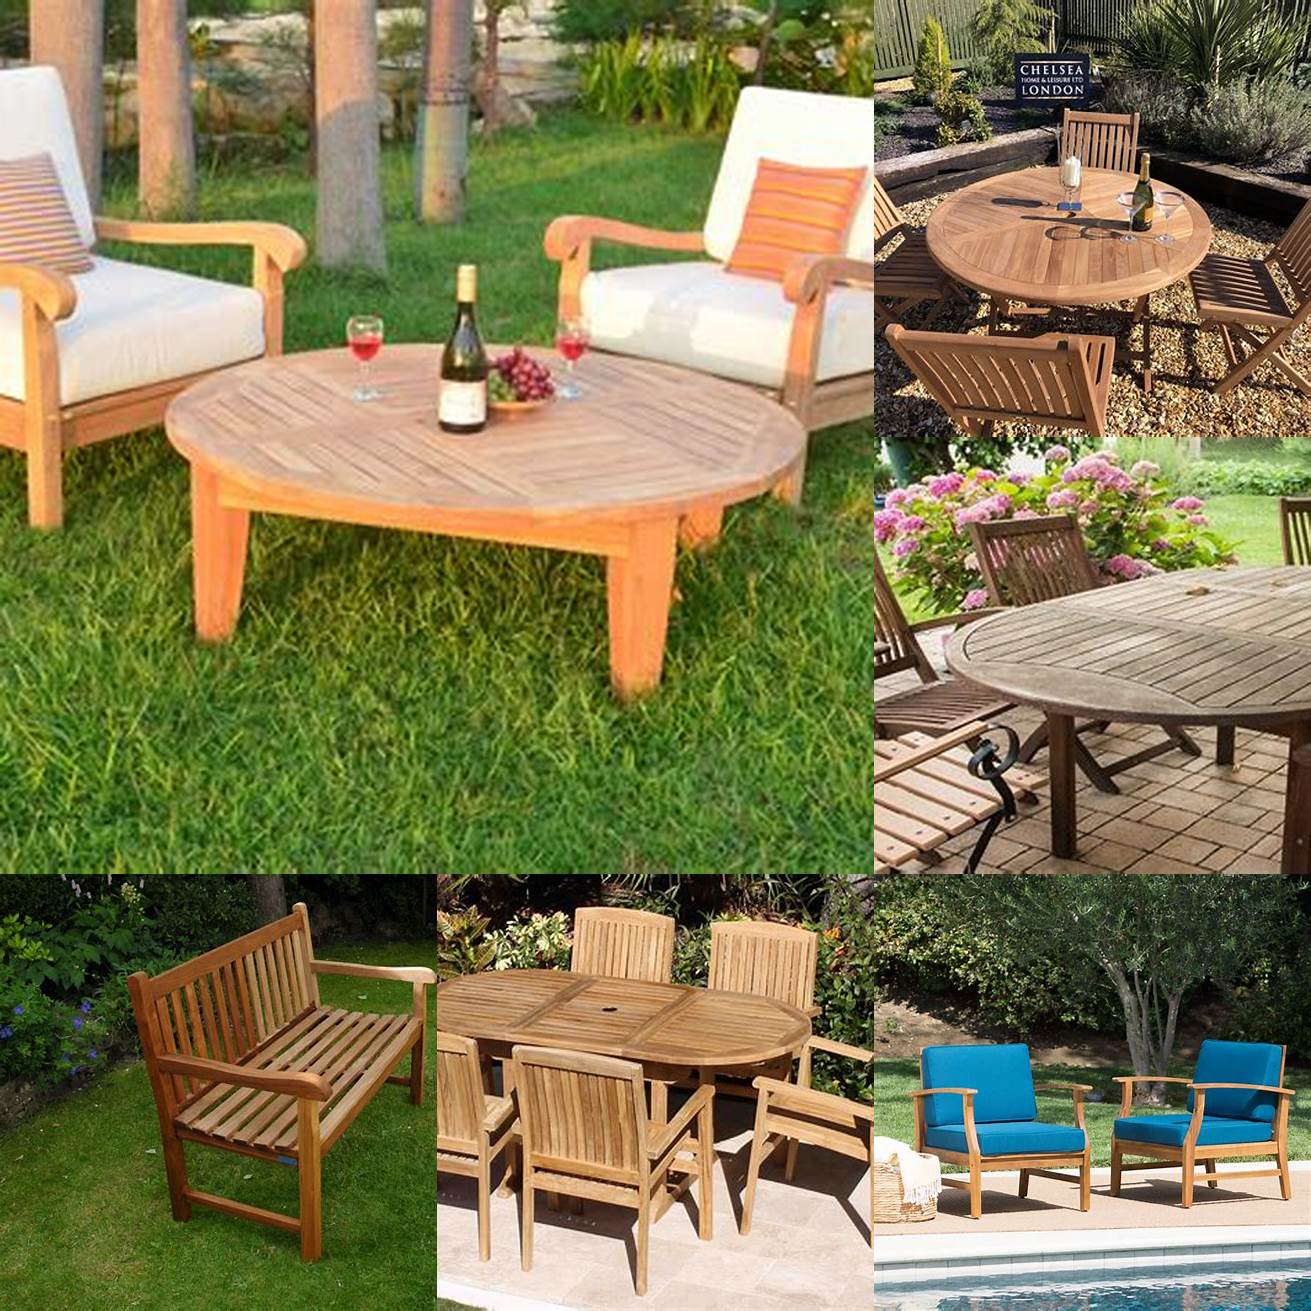 Teak outdoor furniture with teak oil applied